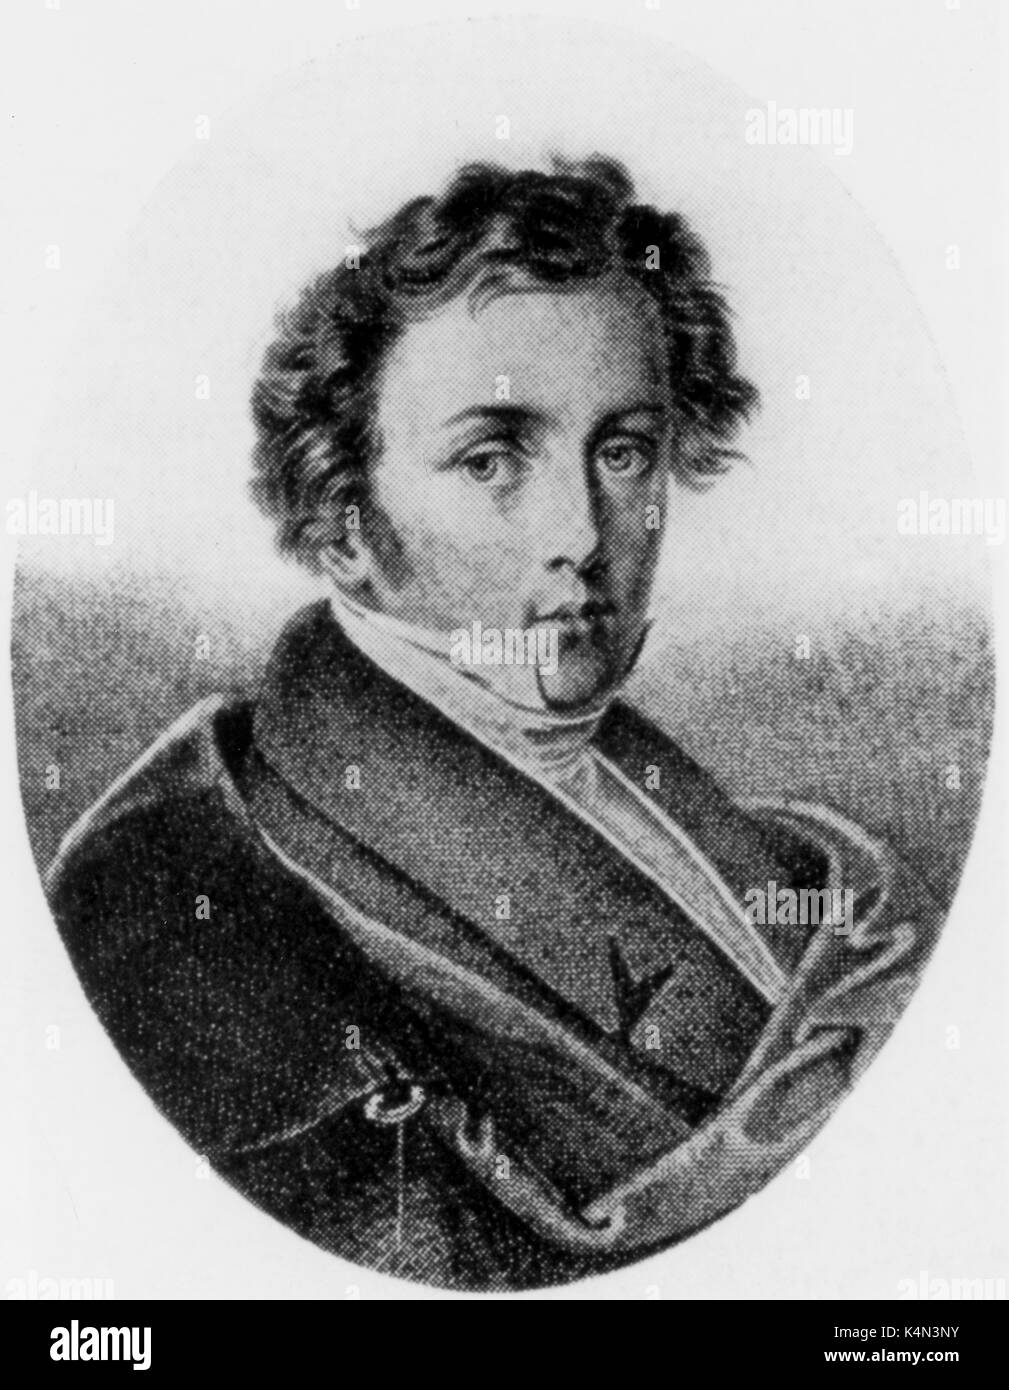 Wilhelm Müller, autor,1794-1857. Amigo de Schubert, escribió la letra de Schubert 'Die schöne Müllerin' Foto de stock